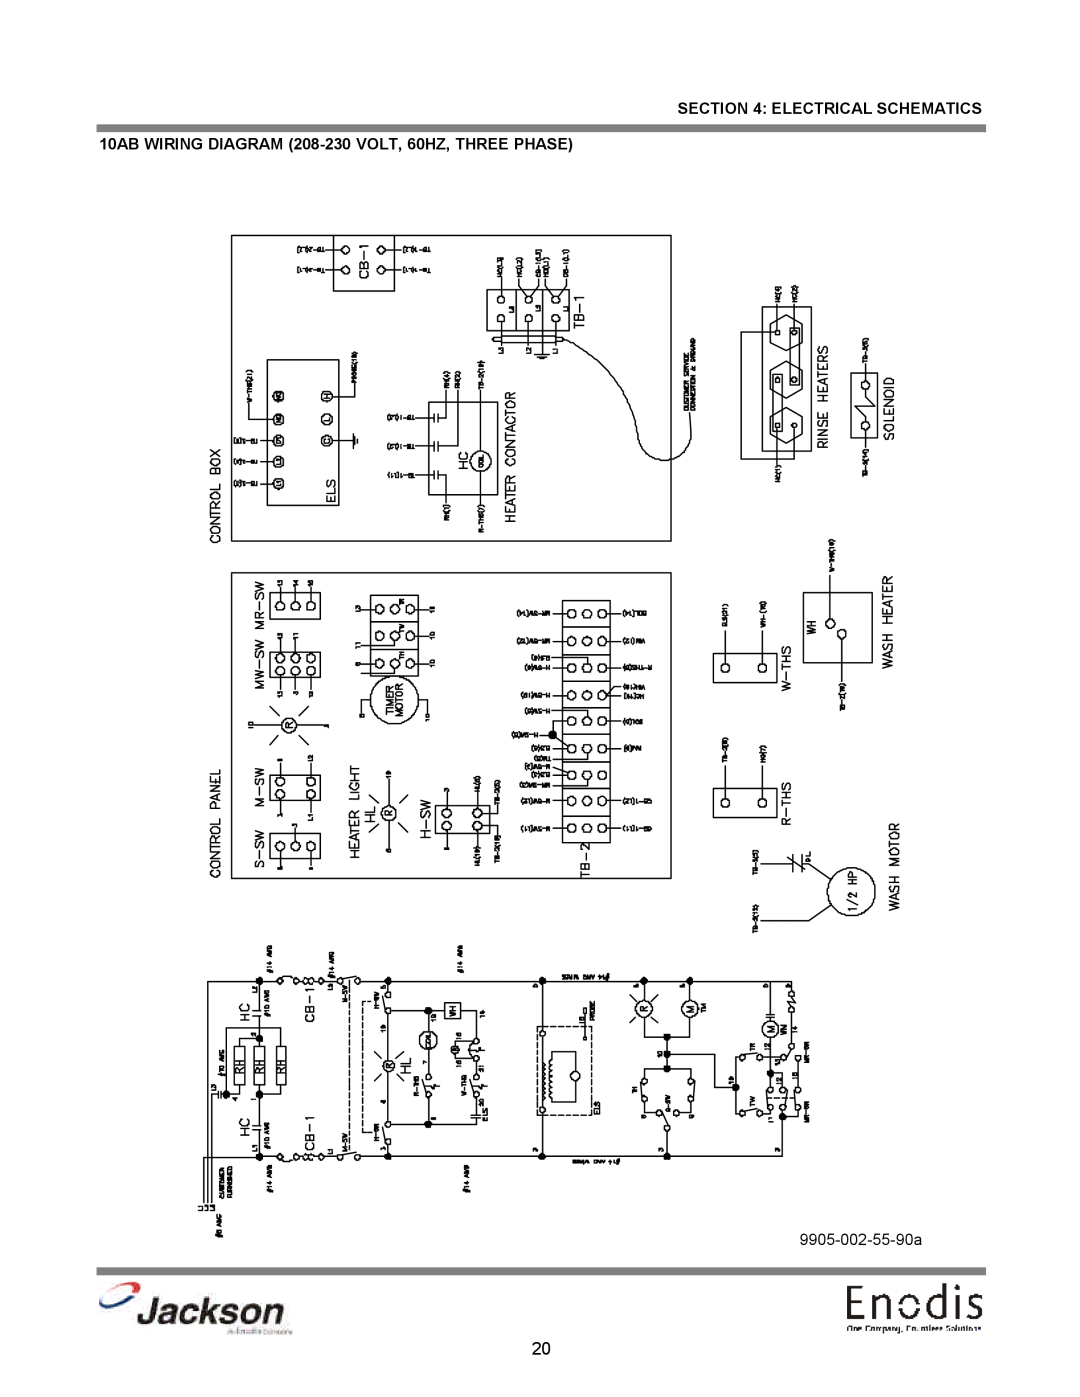 Jackson 10APRB, 10U Electrical Schematics, 10AB WIRING DIAGRAM 208-230 VOLT, 60HZ, THREE PHASE, 9905-002-55-90a 